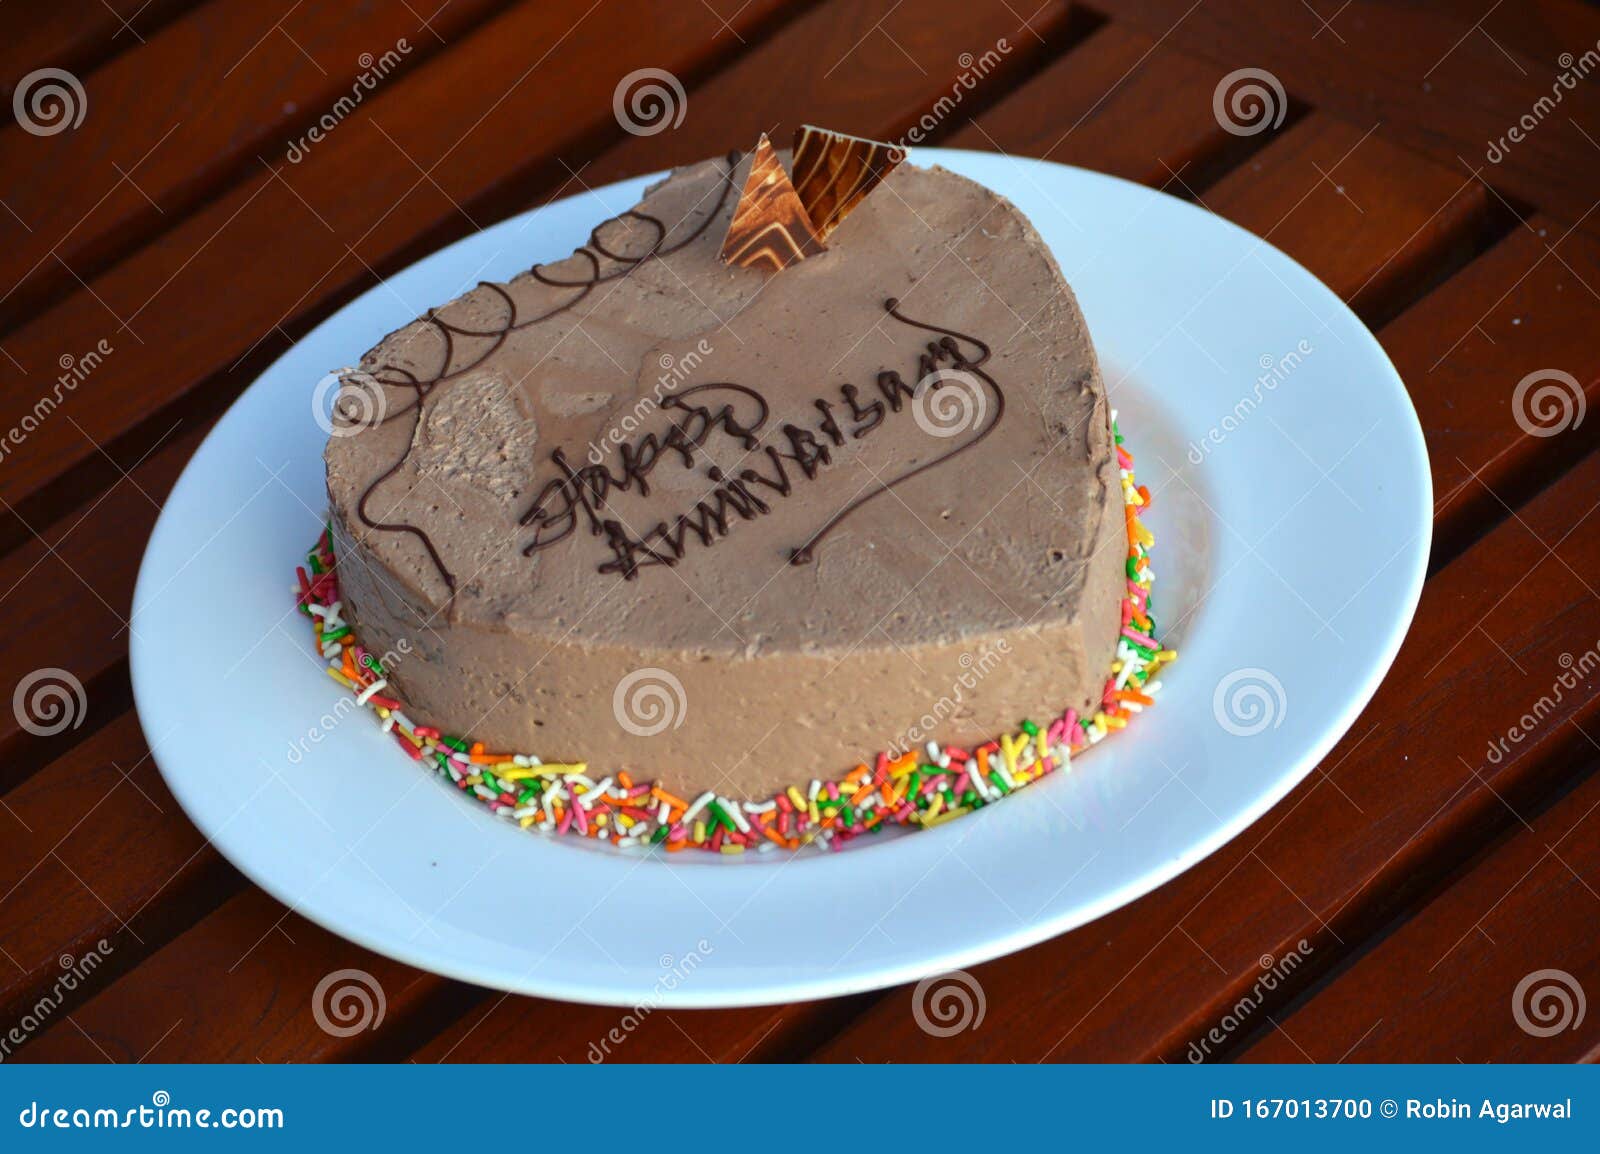 A Chocolate Cake on Wedding Anniversary Stock Photo - Image of ...